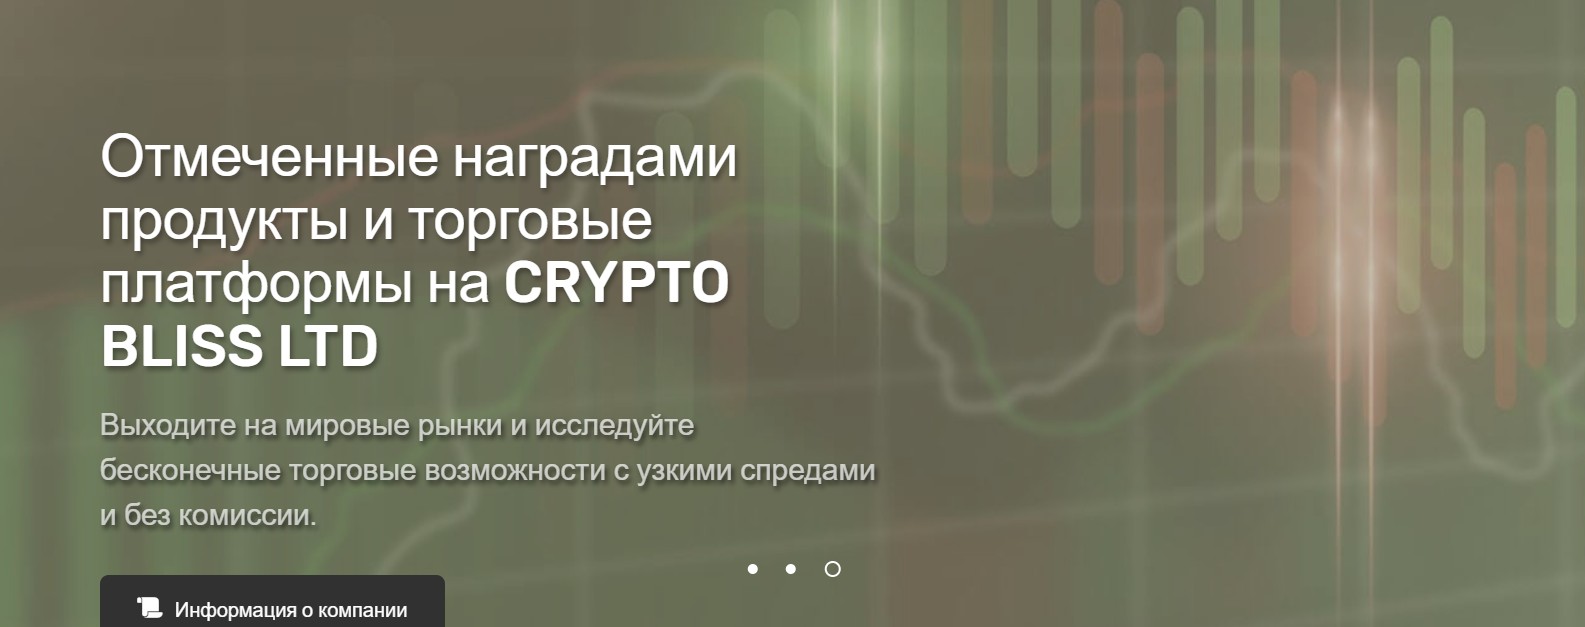 Cryptobliss обзор сайта